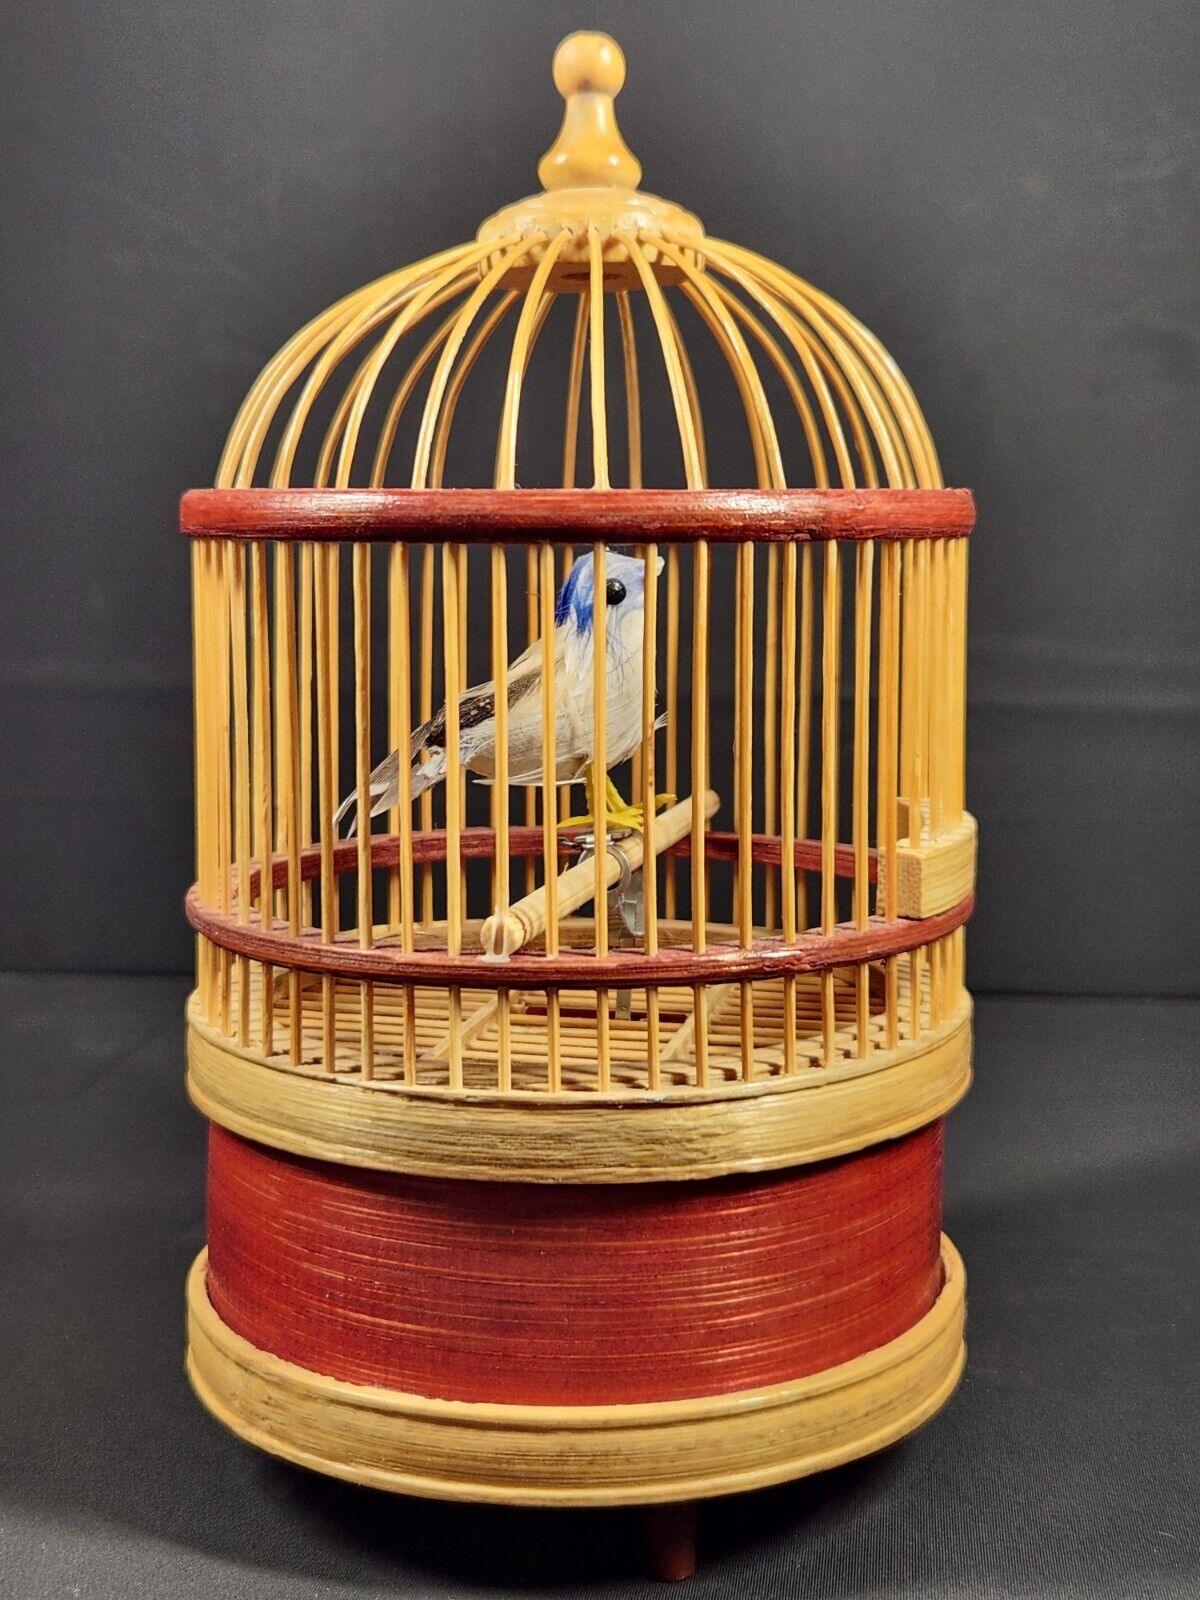 Sankyo Japan bamboo chirping moving bird cage music box vintage-works see video